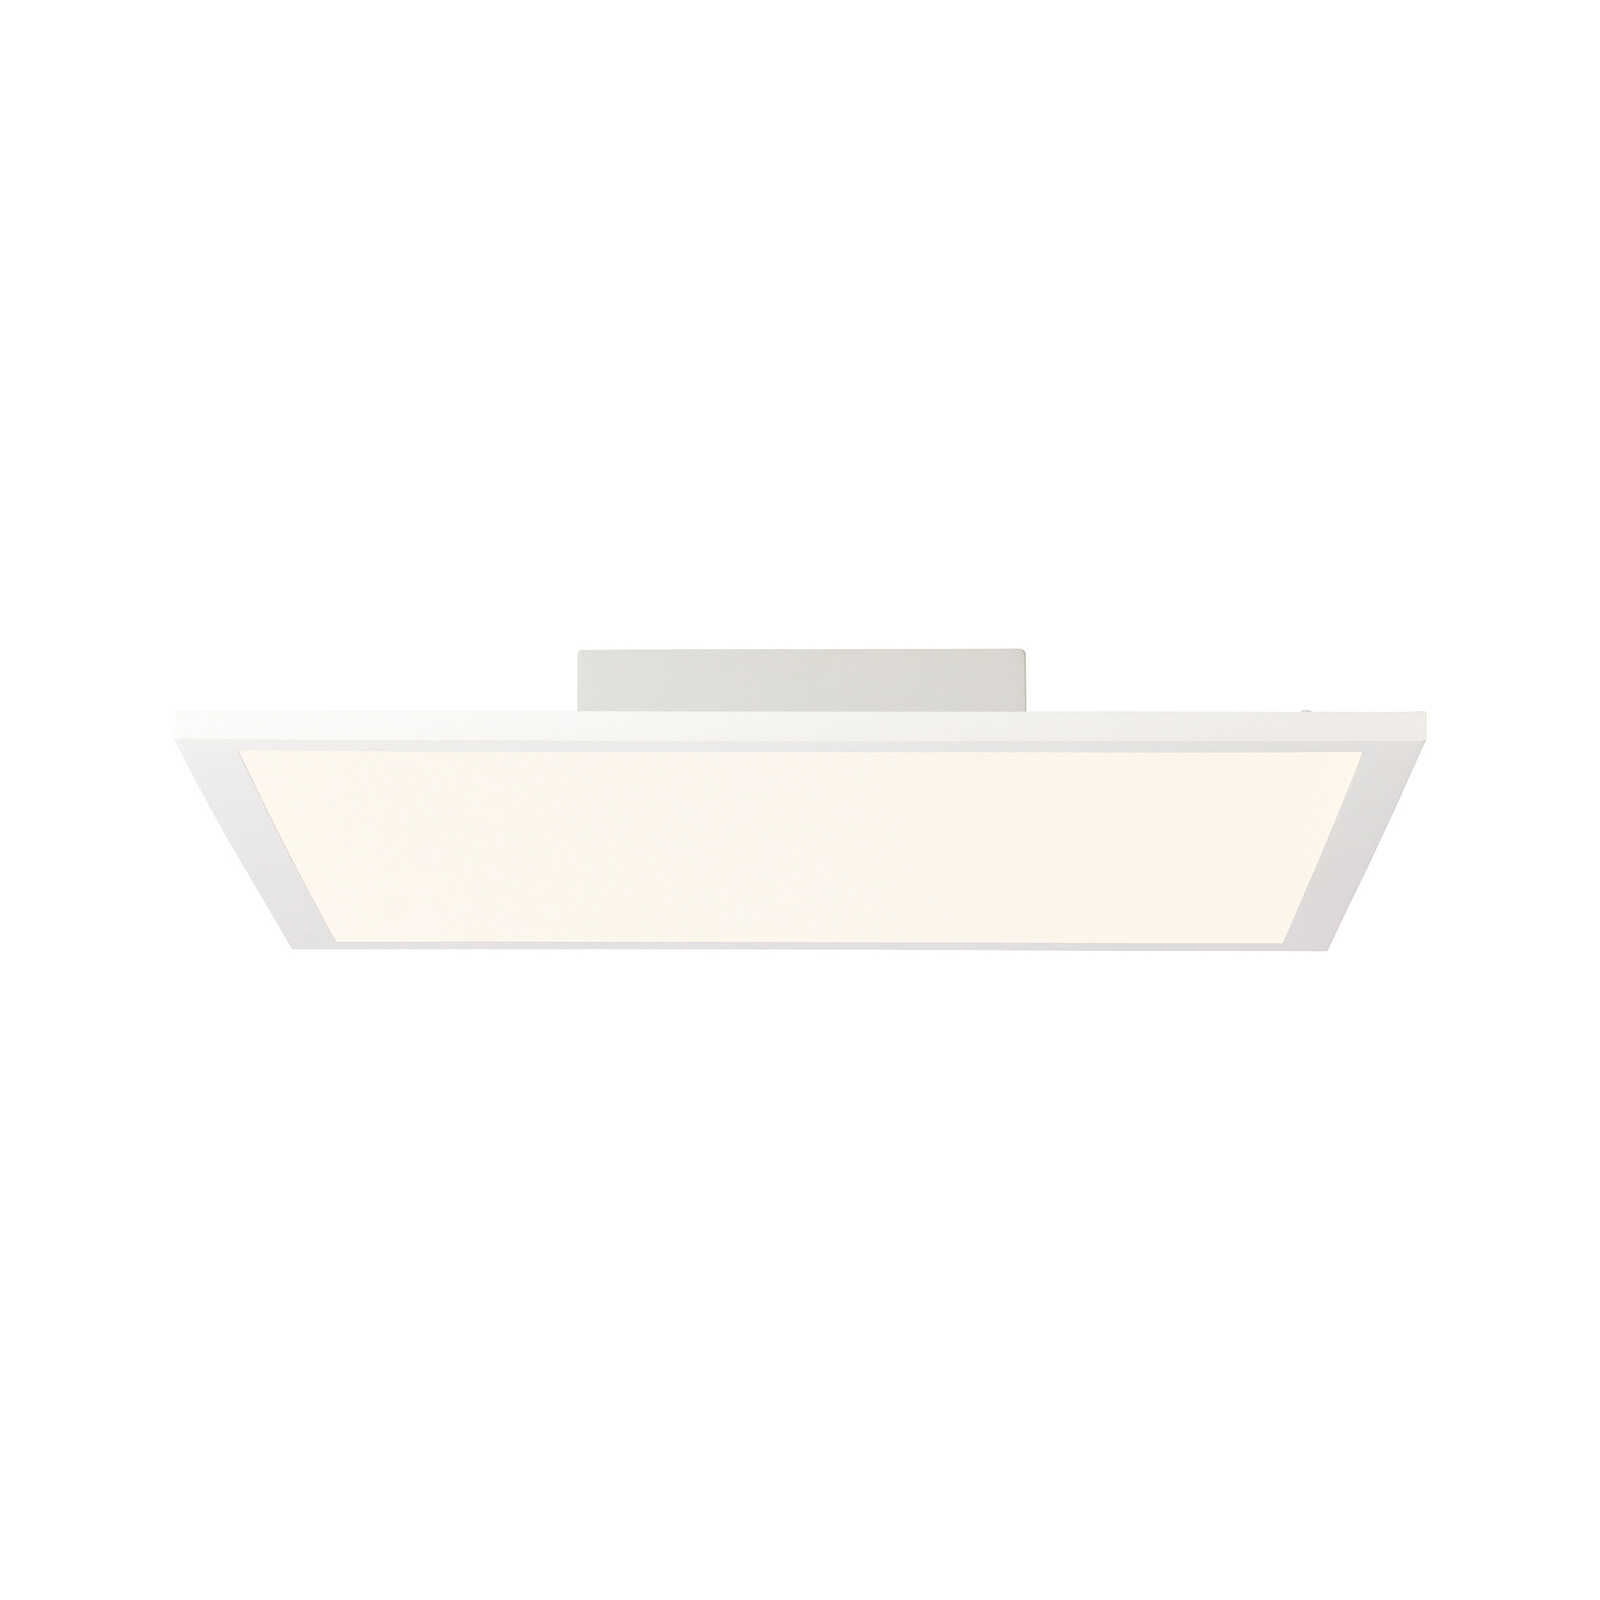 Plastic ceiling light - Constantin 1 - White
